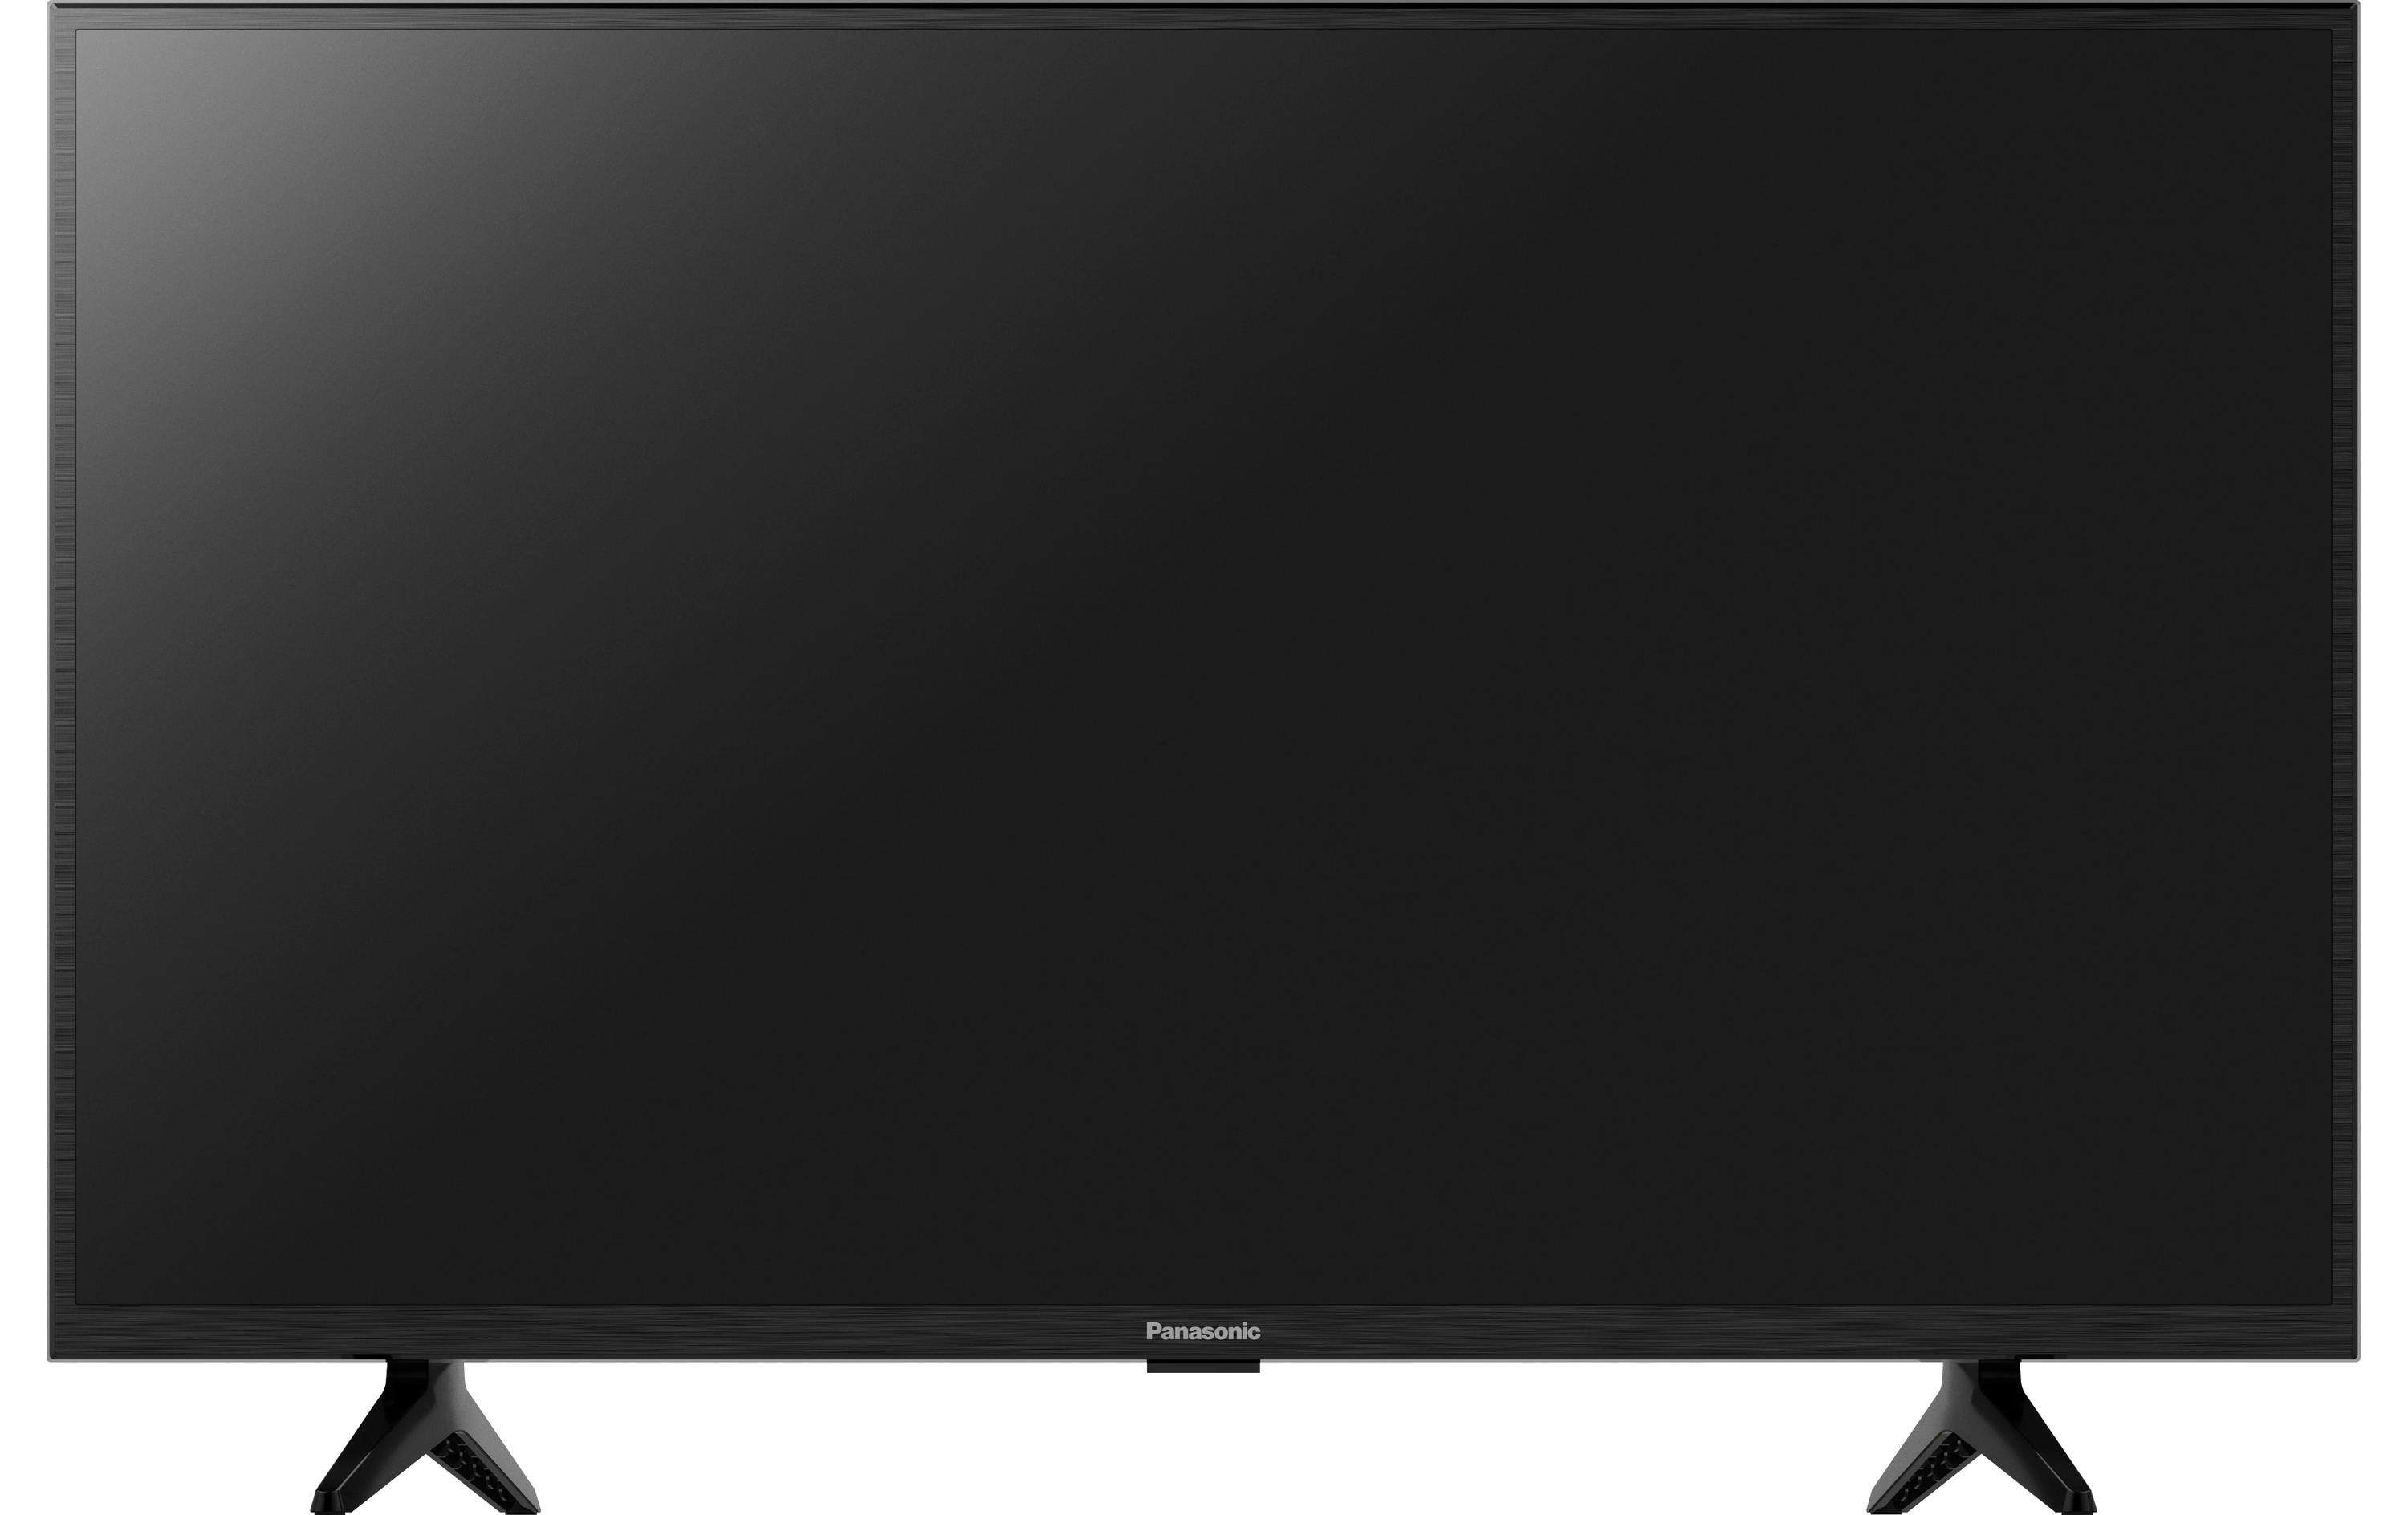 Panasonic TV TX-32MSW504 32, 1366 x 768 (WXGA), LED-LCD